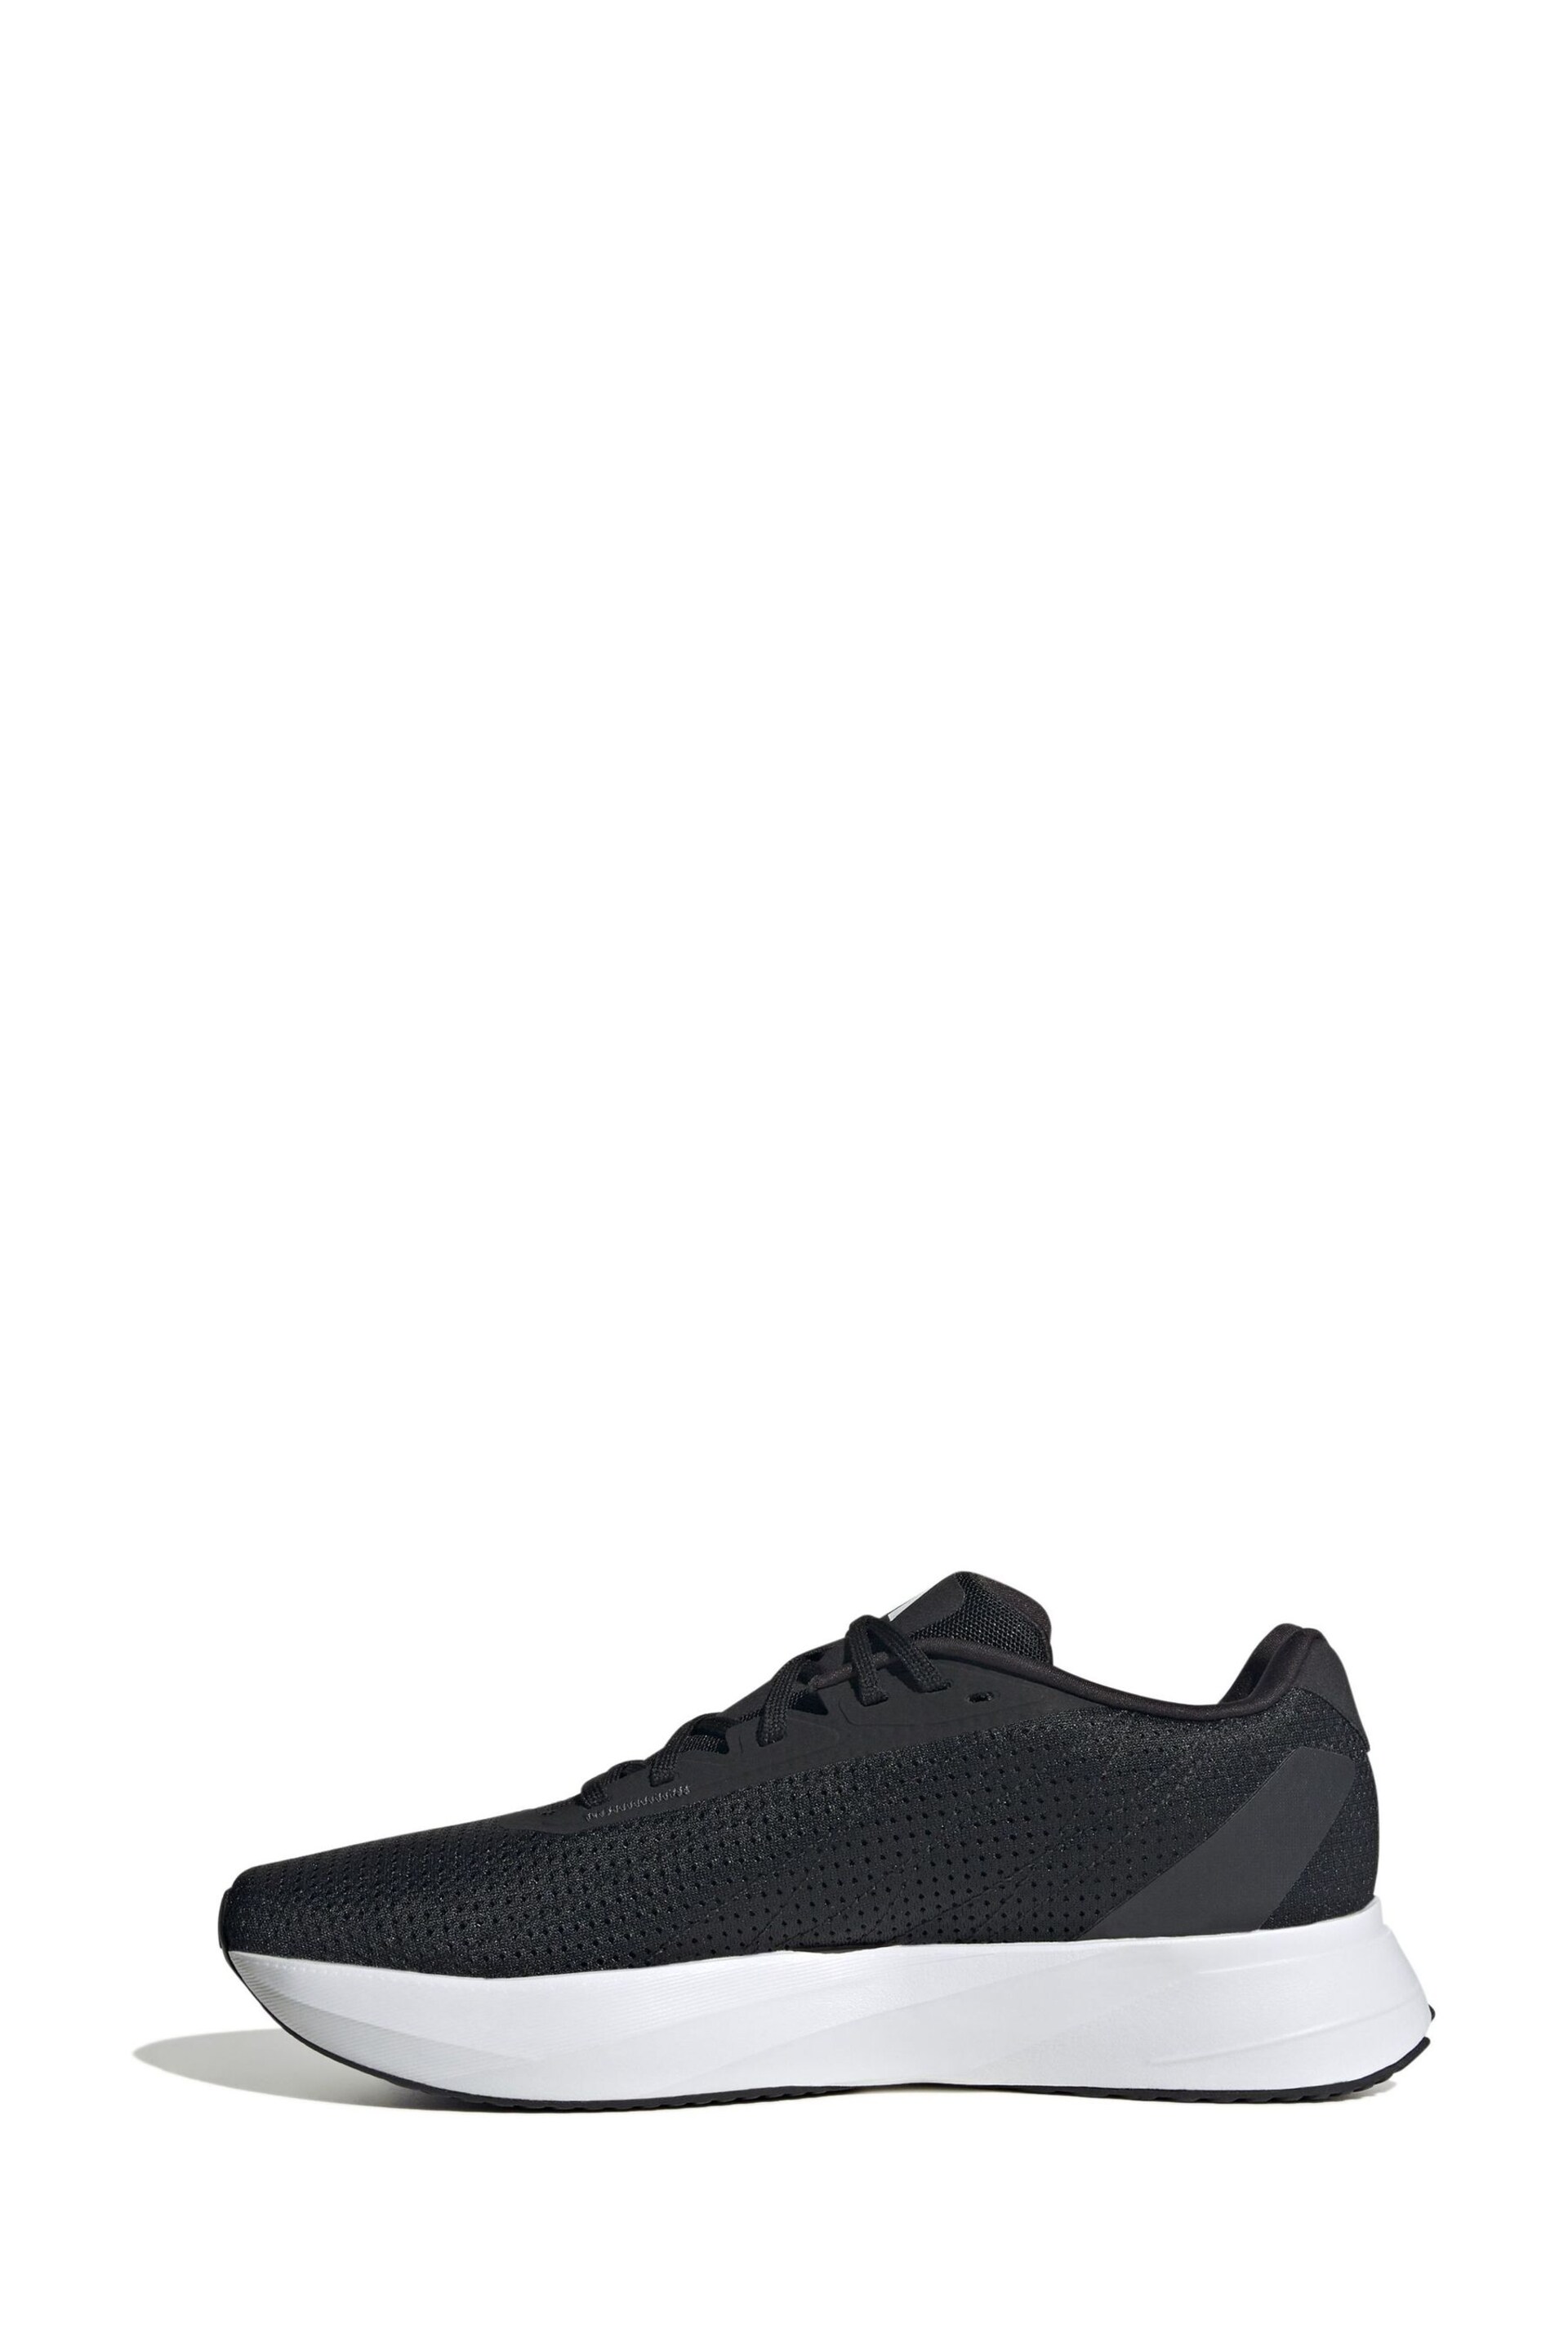 adidas Black/White Duramo SL Trainers - Image 2 of 9